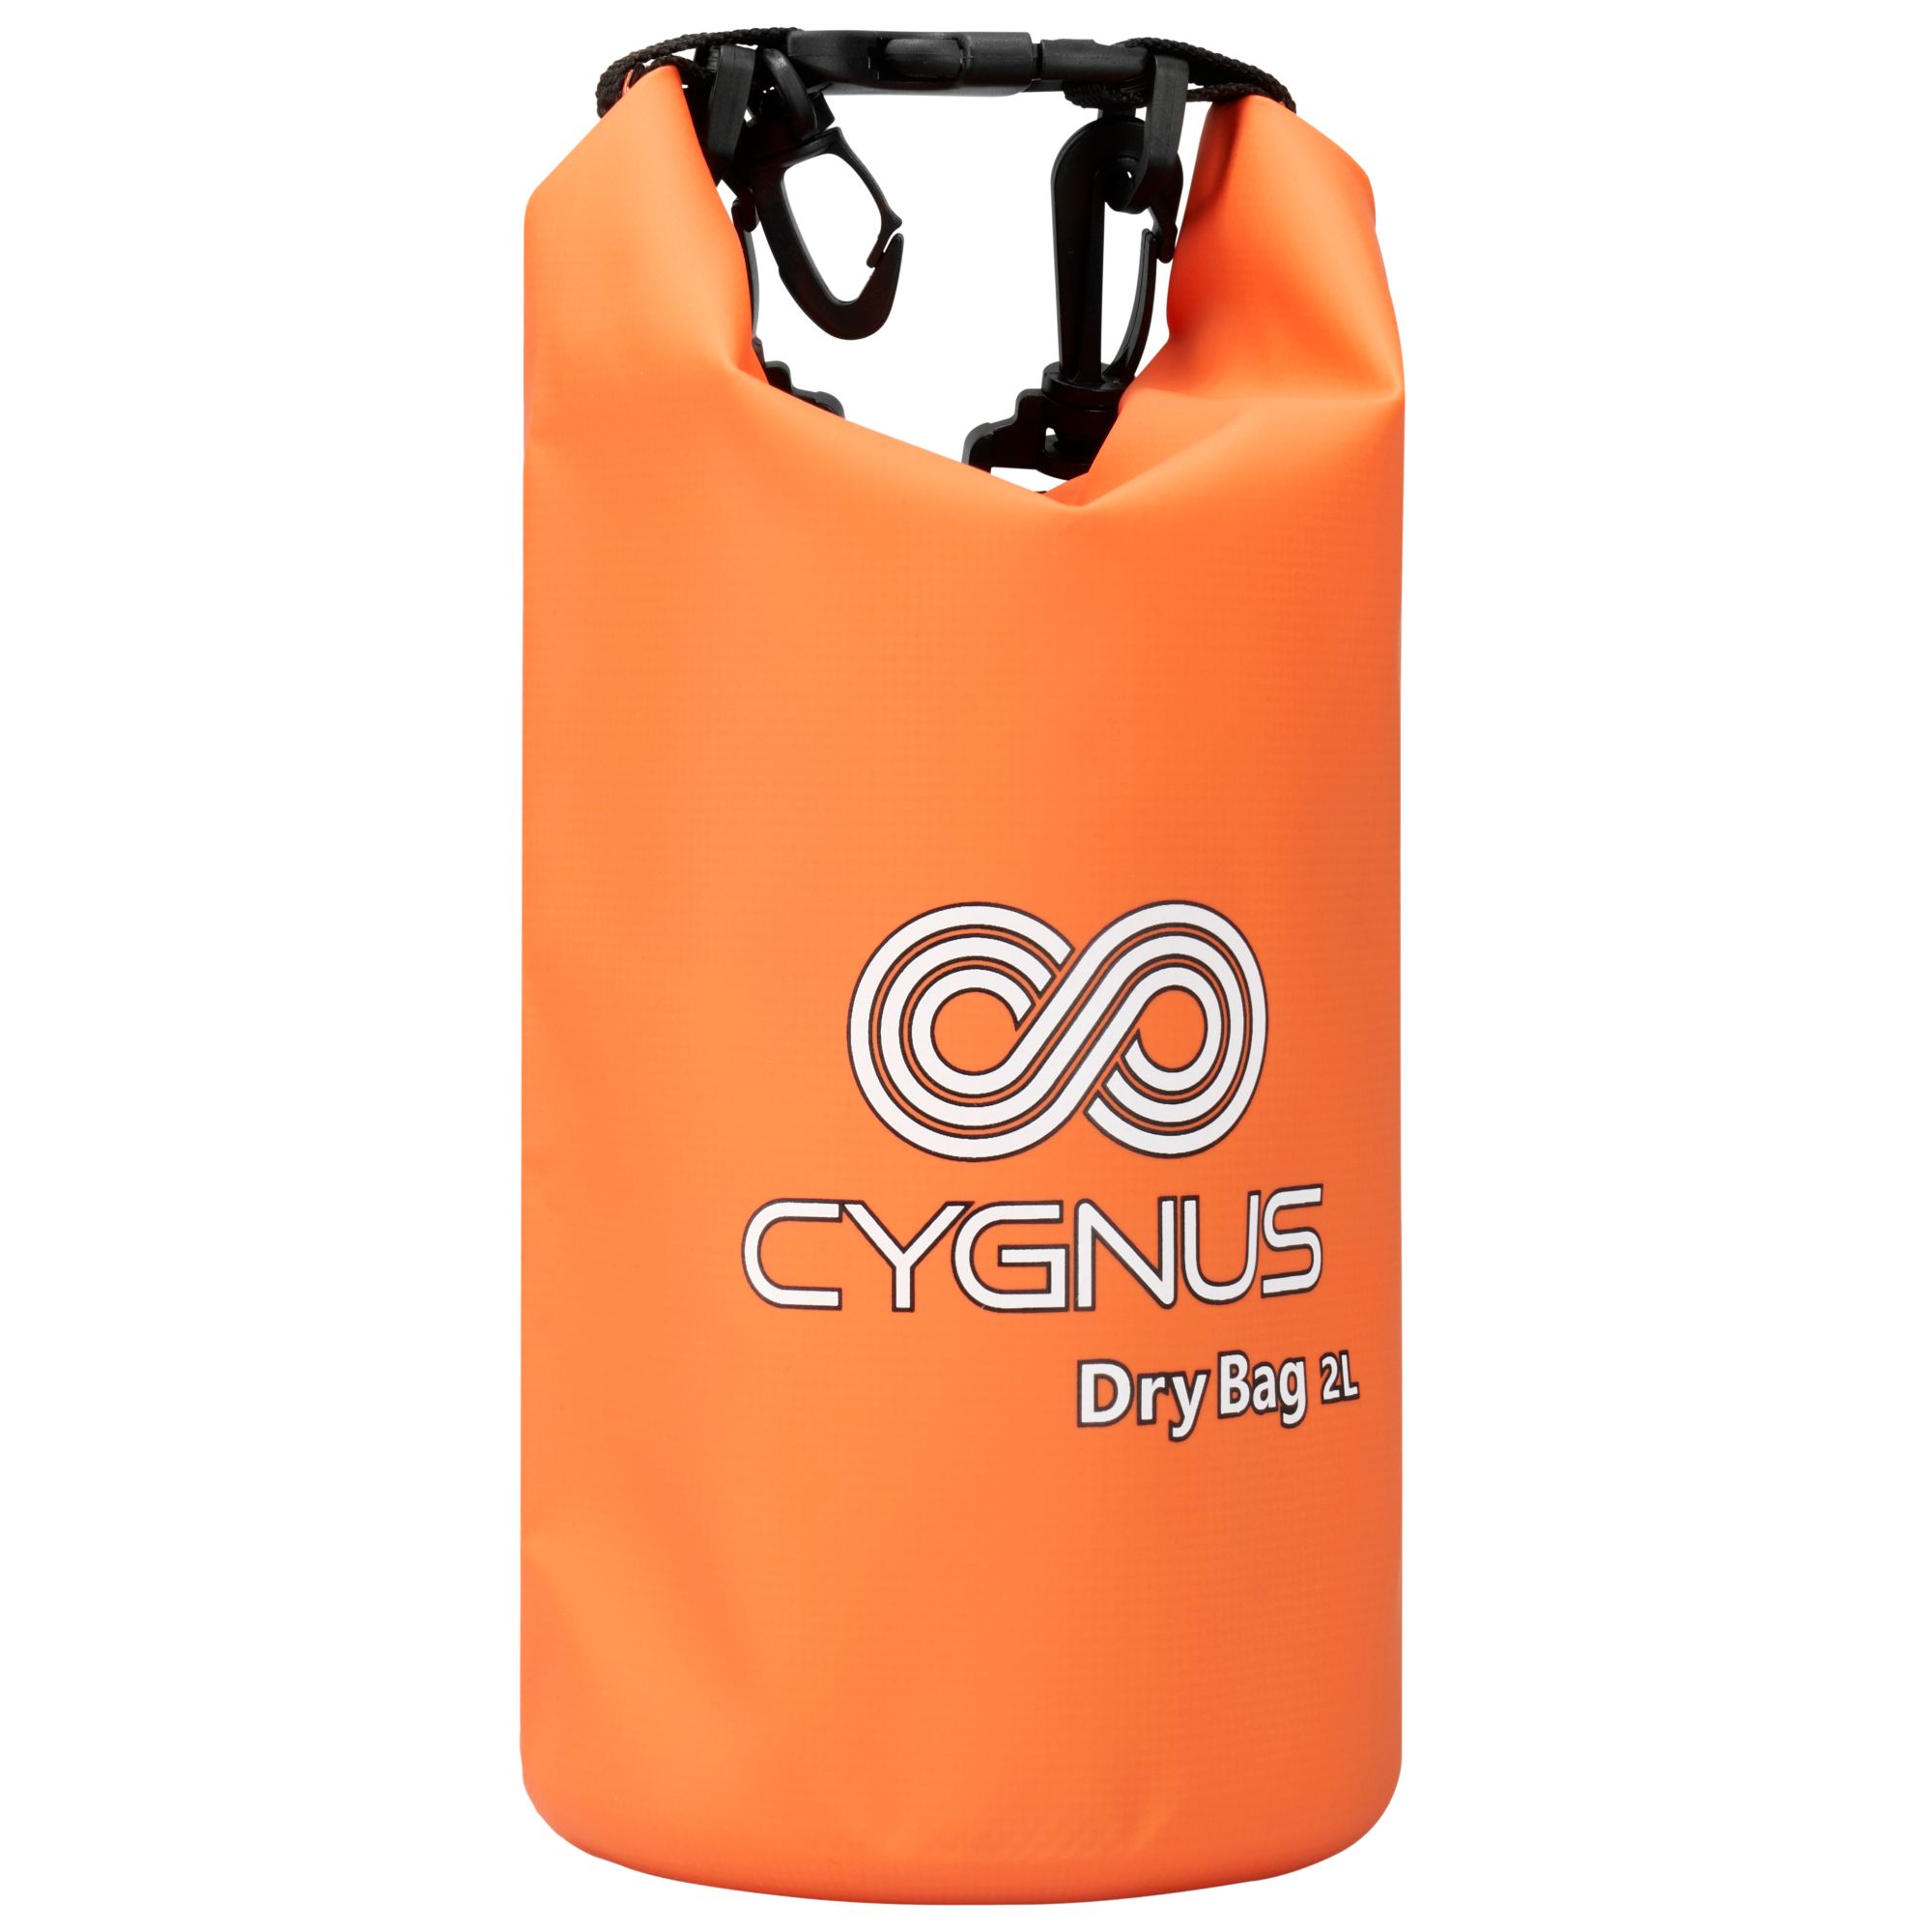 Dry Bag 2L Pret Mic Online Cygnus imagine La Oferta Online